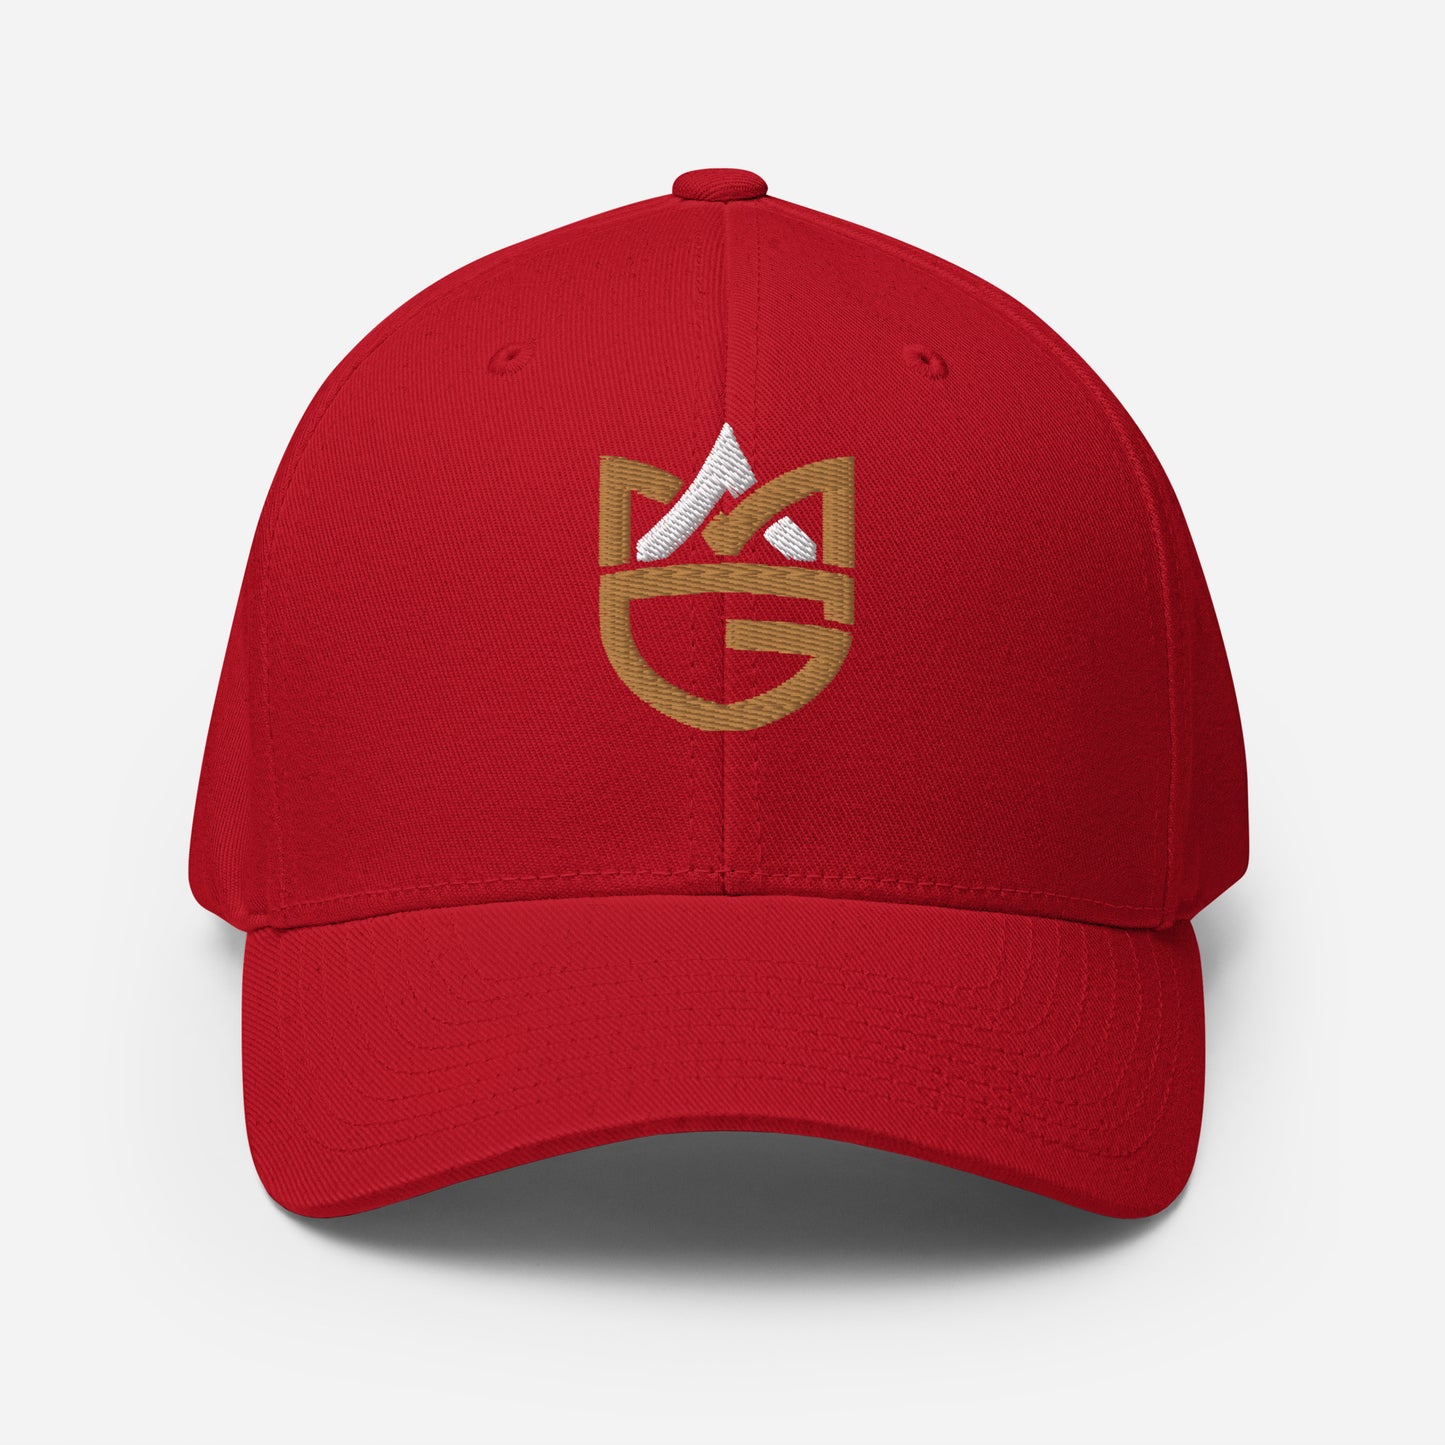 MG Logo Hat by Myron Golden